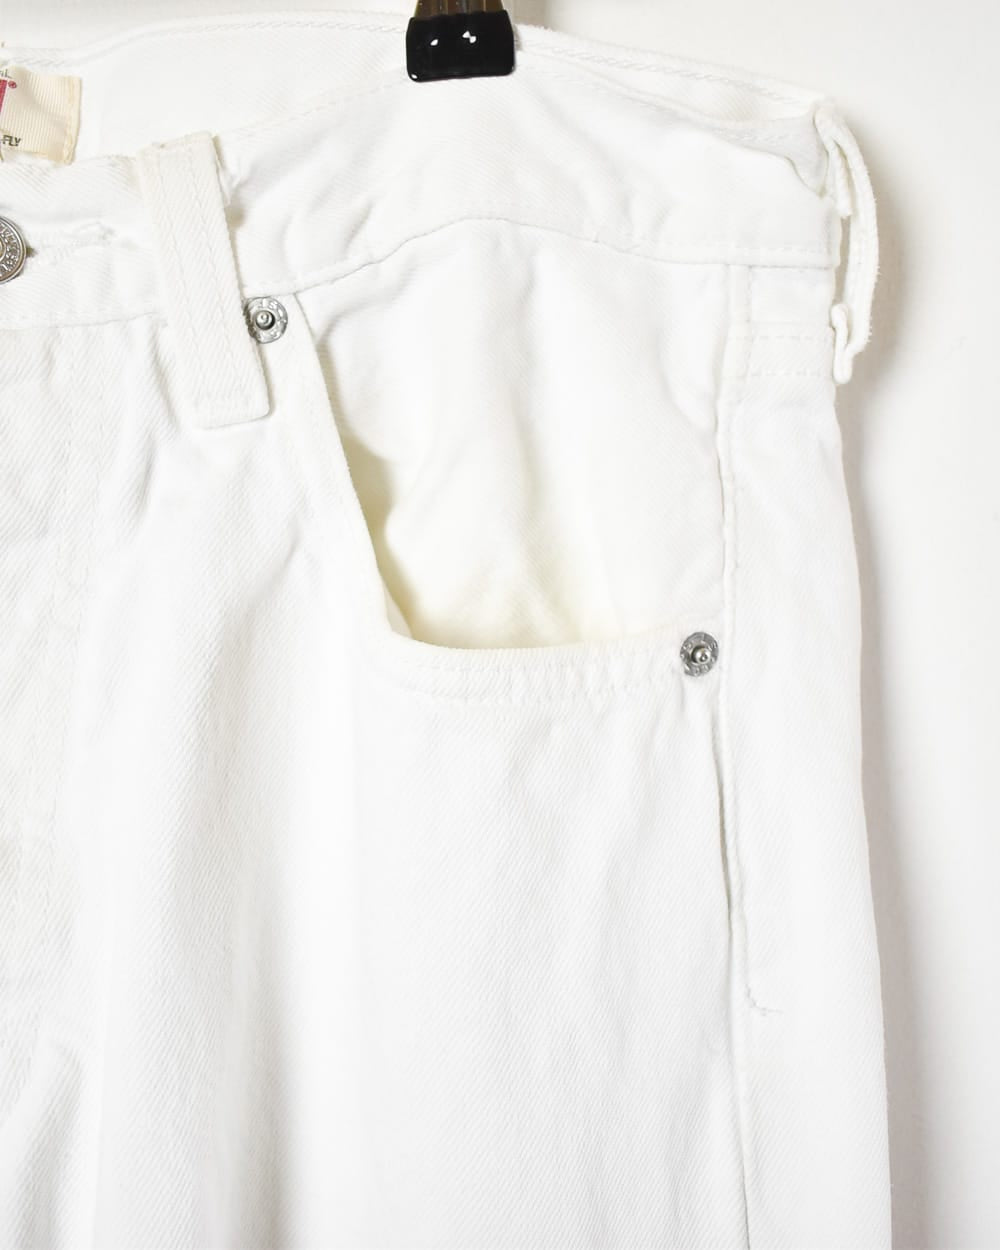 White Levi's 501 Jeans - W32 L32